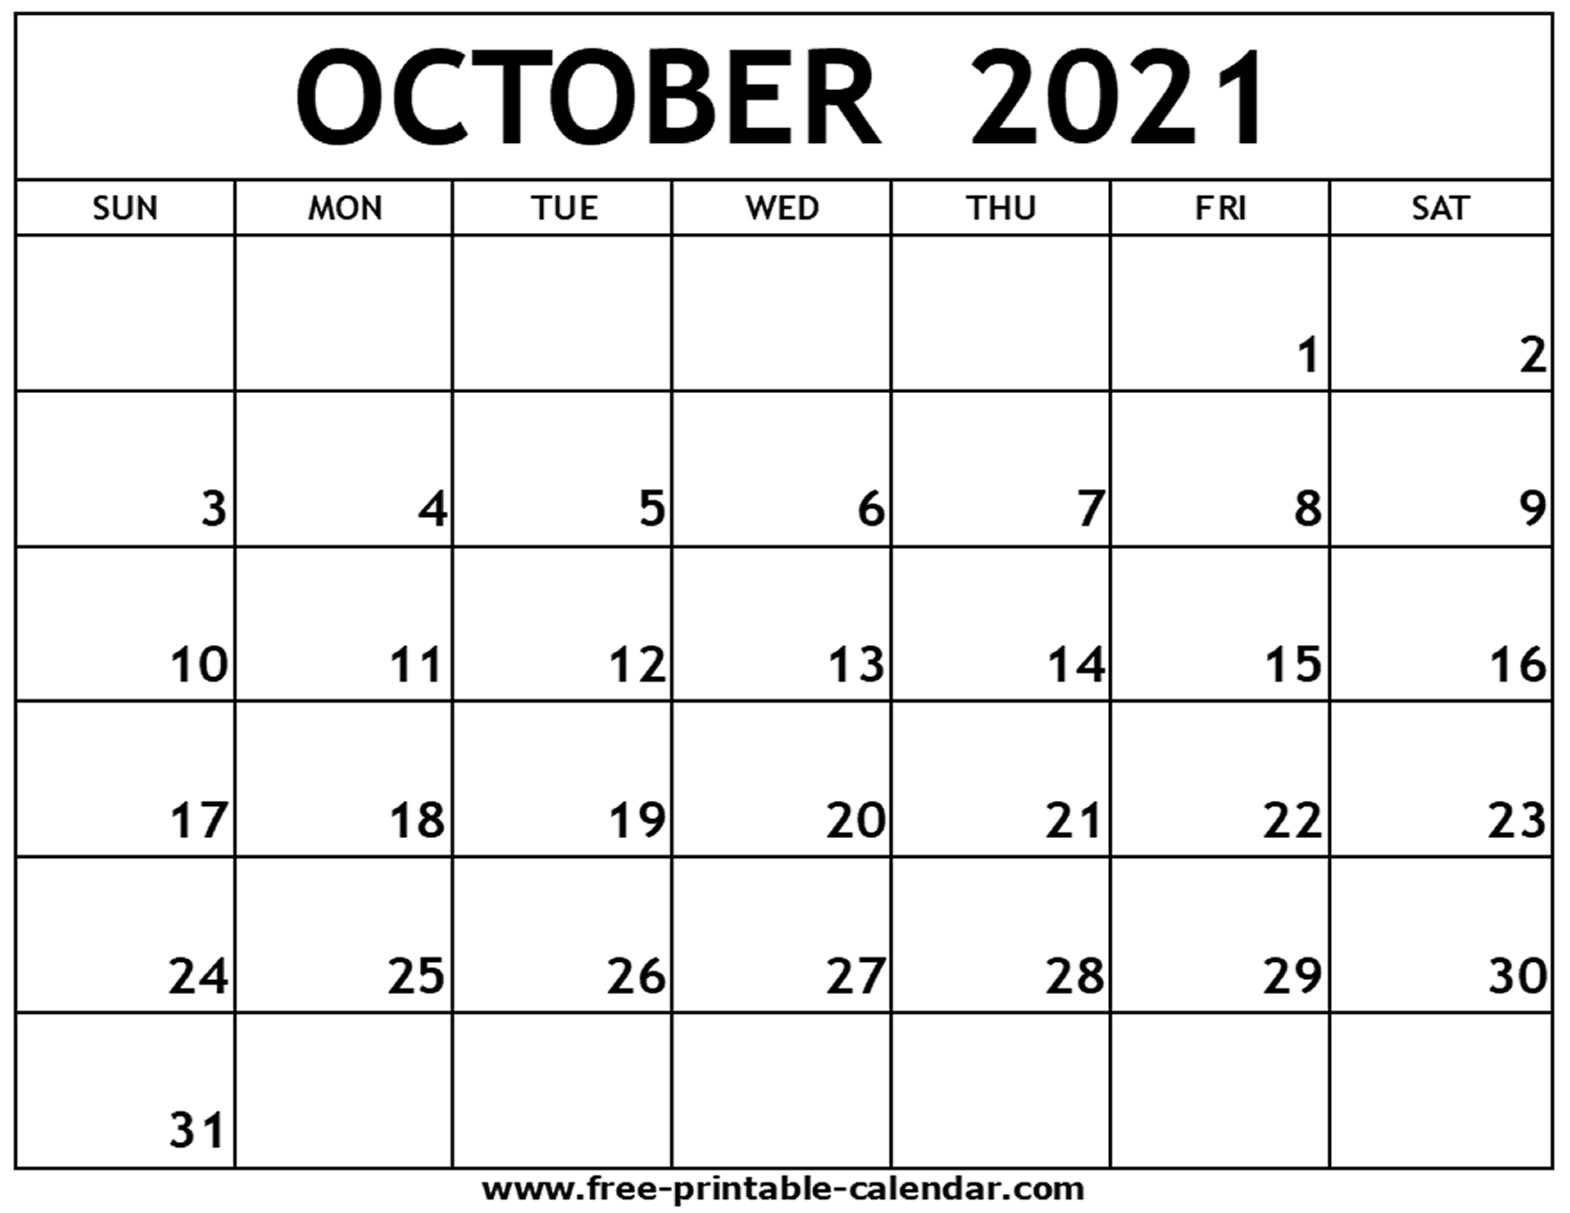 Catch October 2021 Calendar Printable Free